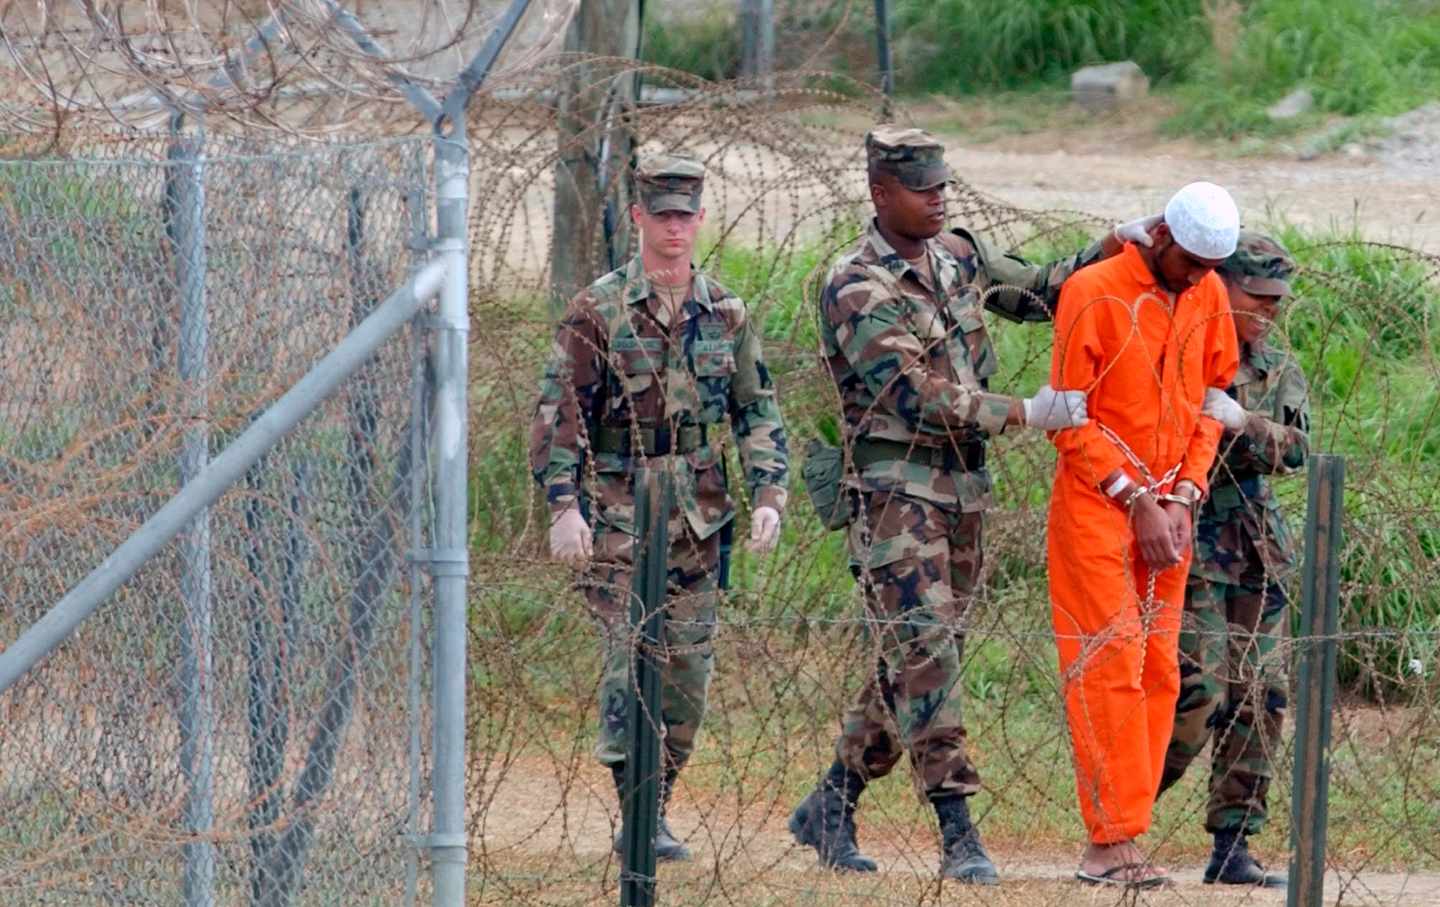 soldier leads prisoner in Guantnamo Bay